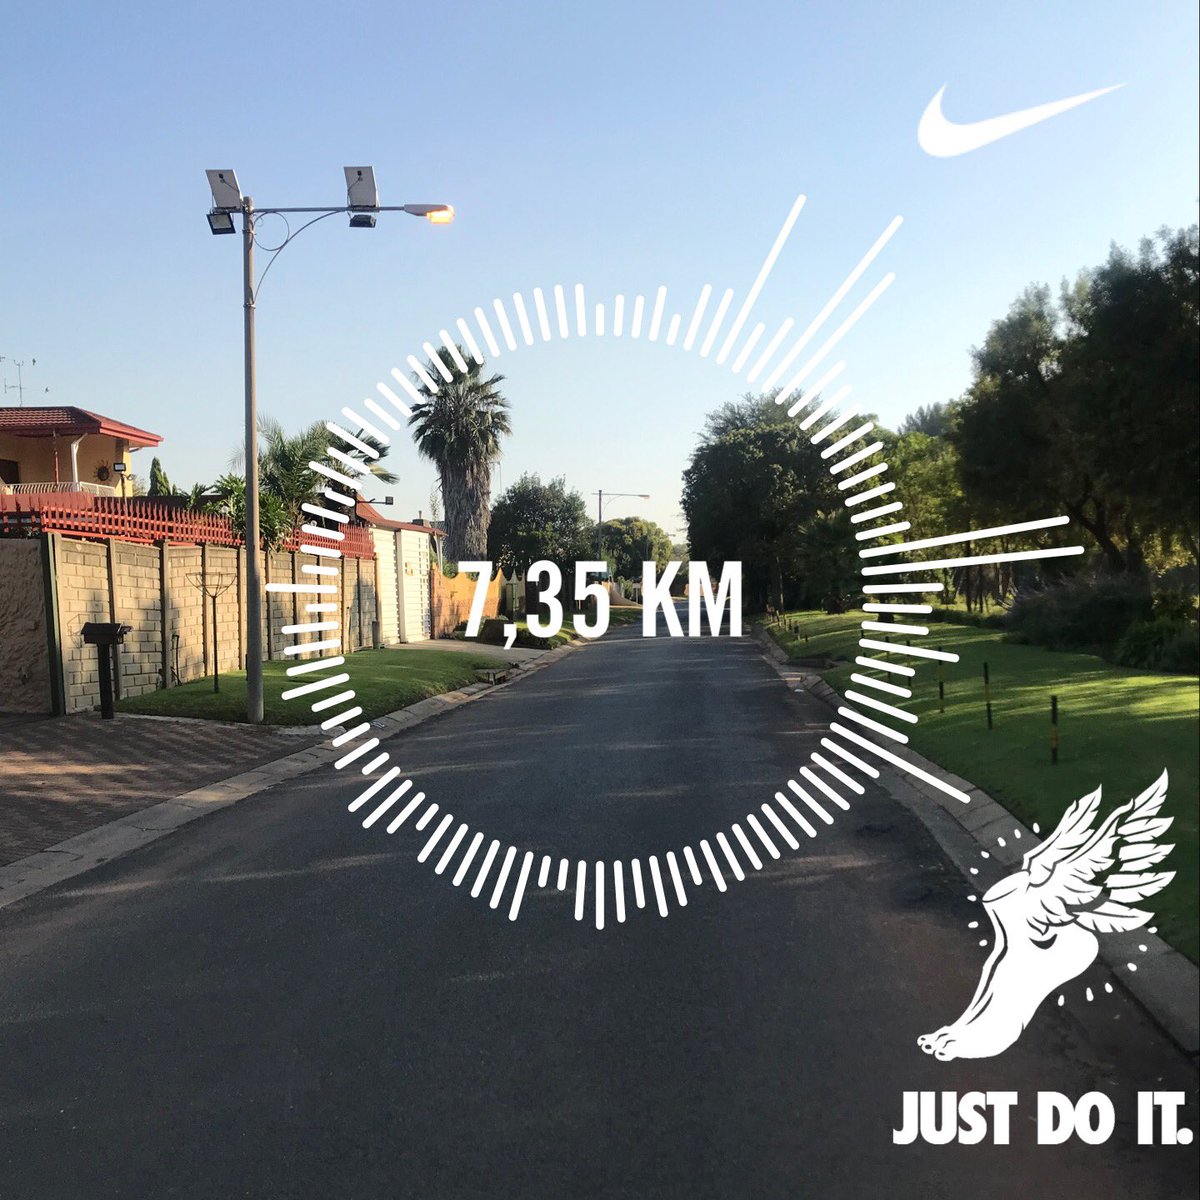 Friday morning pre-weekend run recovery test. We build again. #RunningWithTumiSole #RunningWhileBlack #SiyasebenzaAsidlali #BonaSenzani